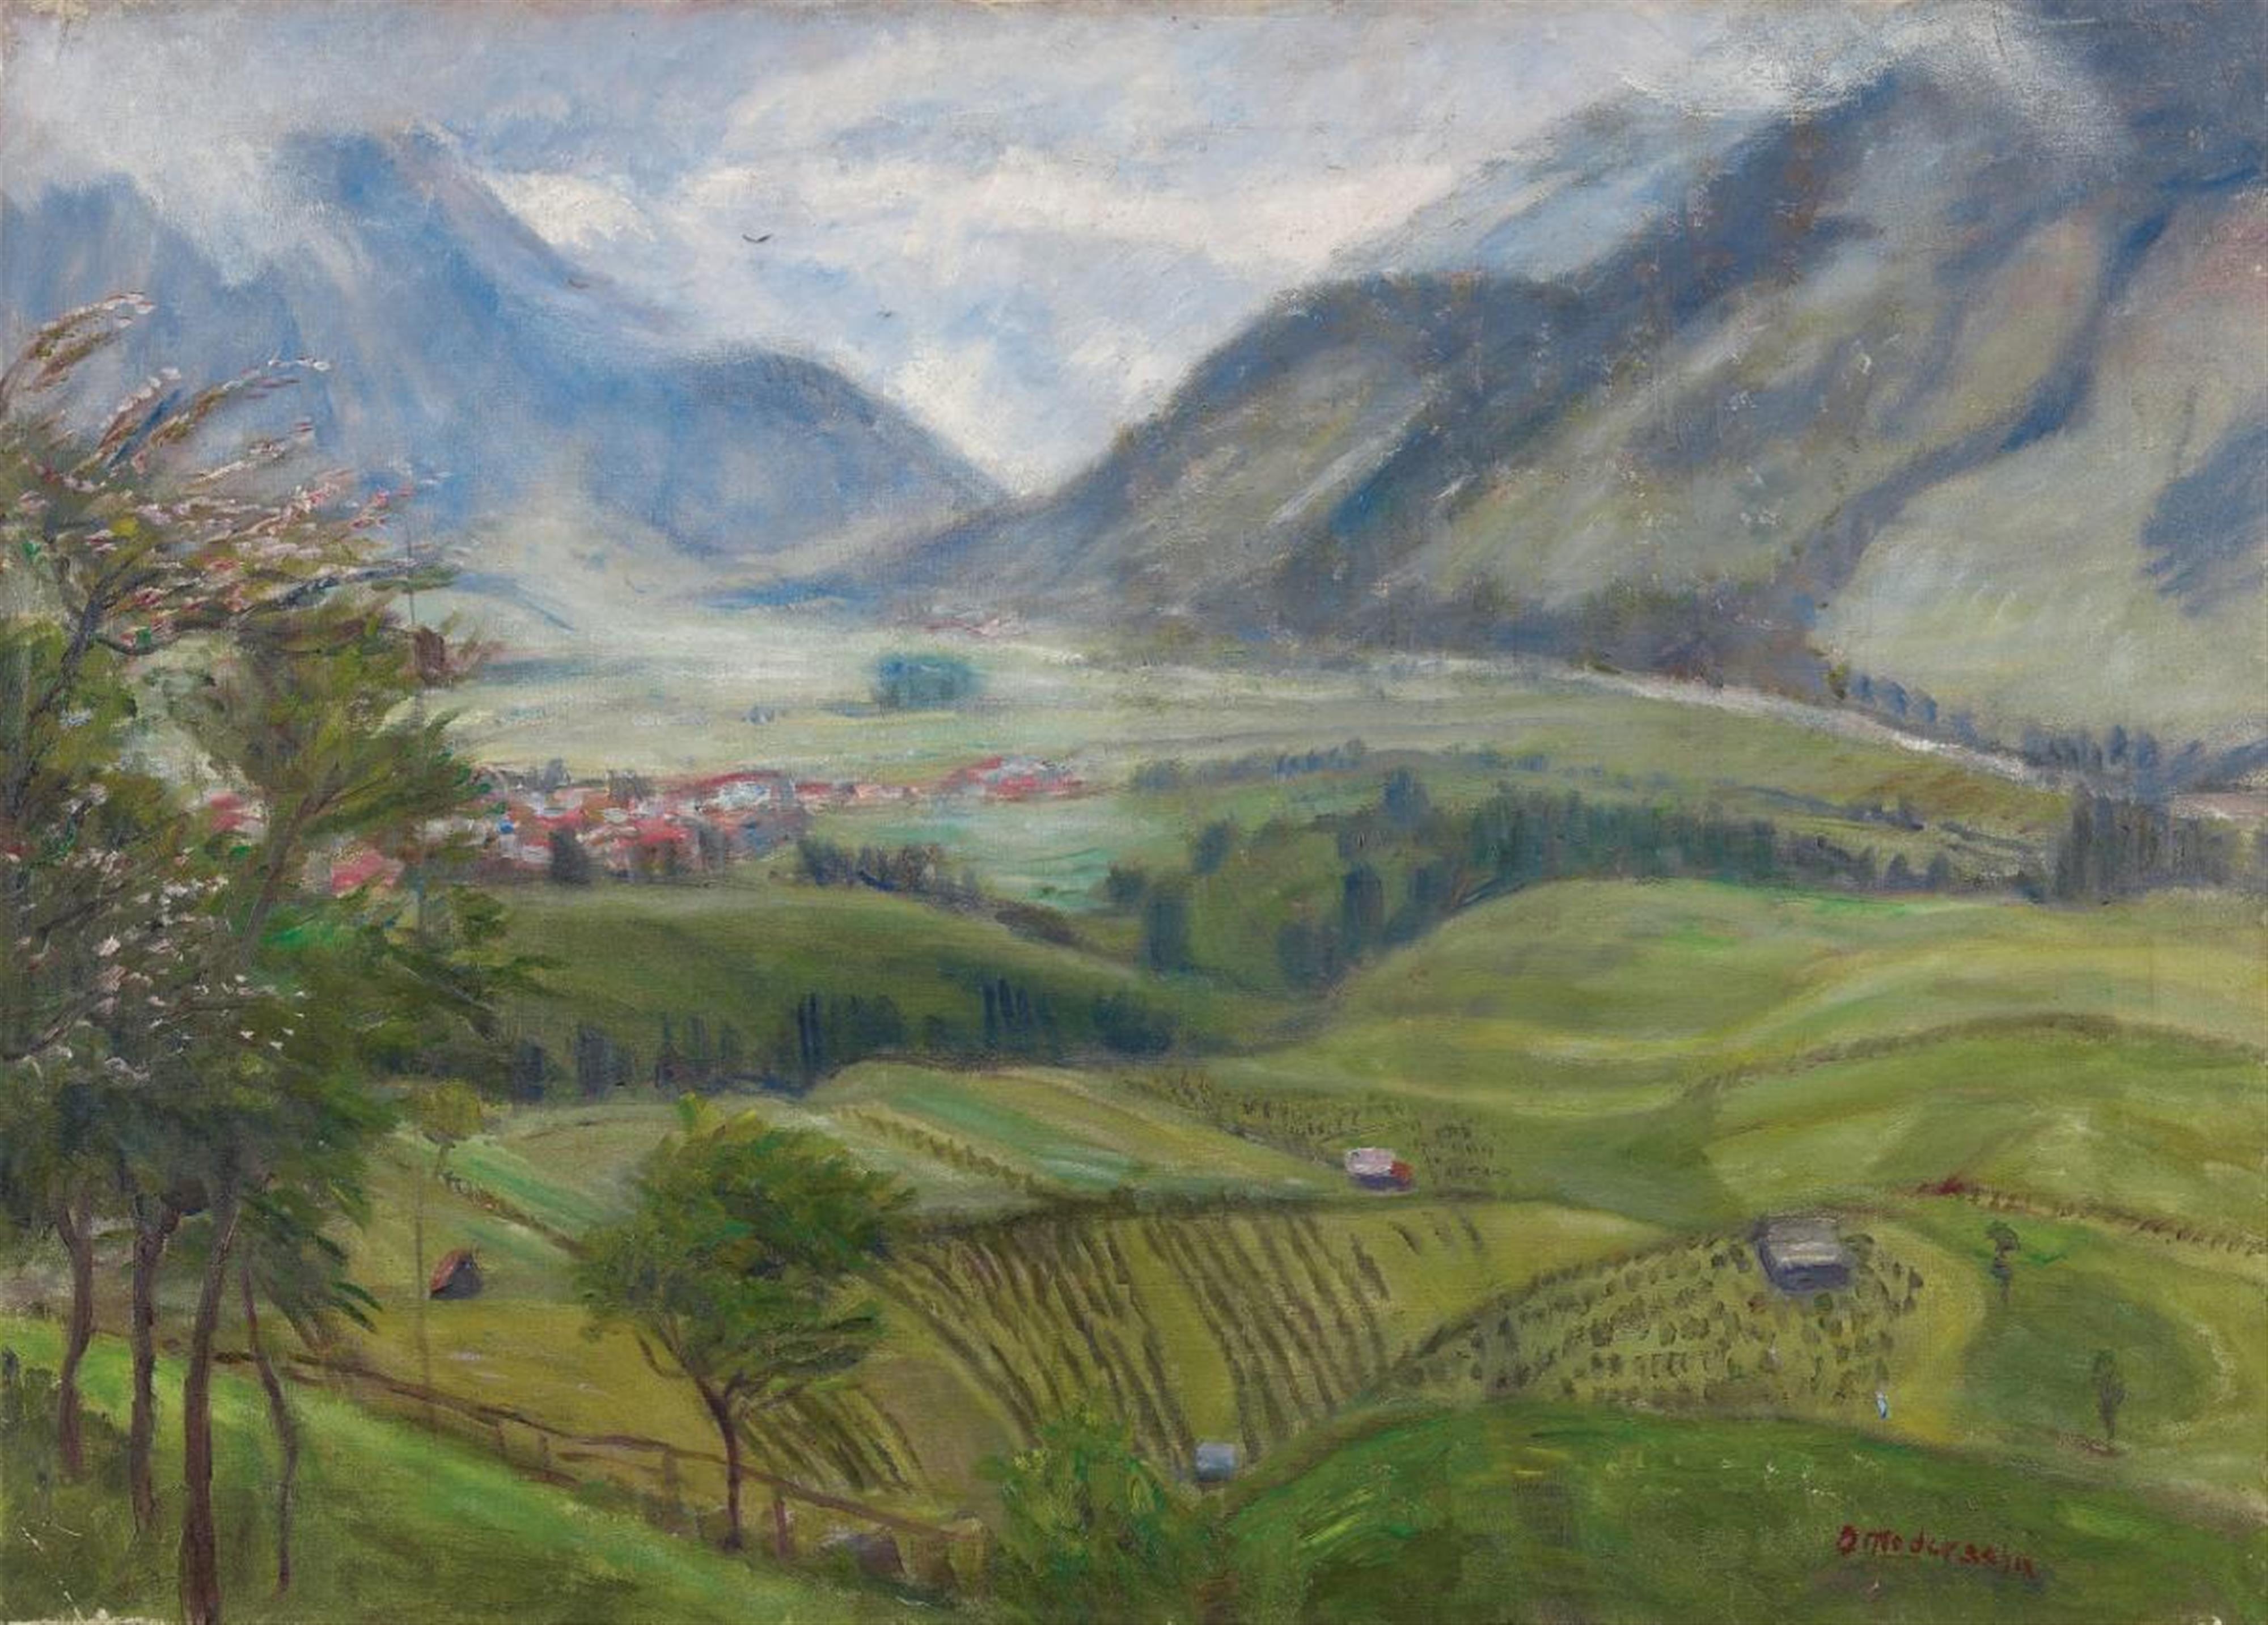 Otto Modersohn - Blick auf Hindelang (Wiesen) [View of Hindelang: Meadows] - image-1